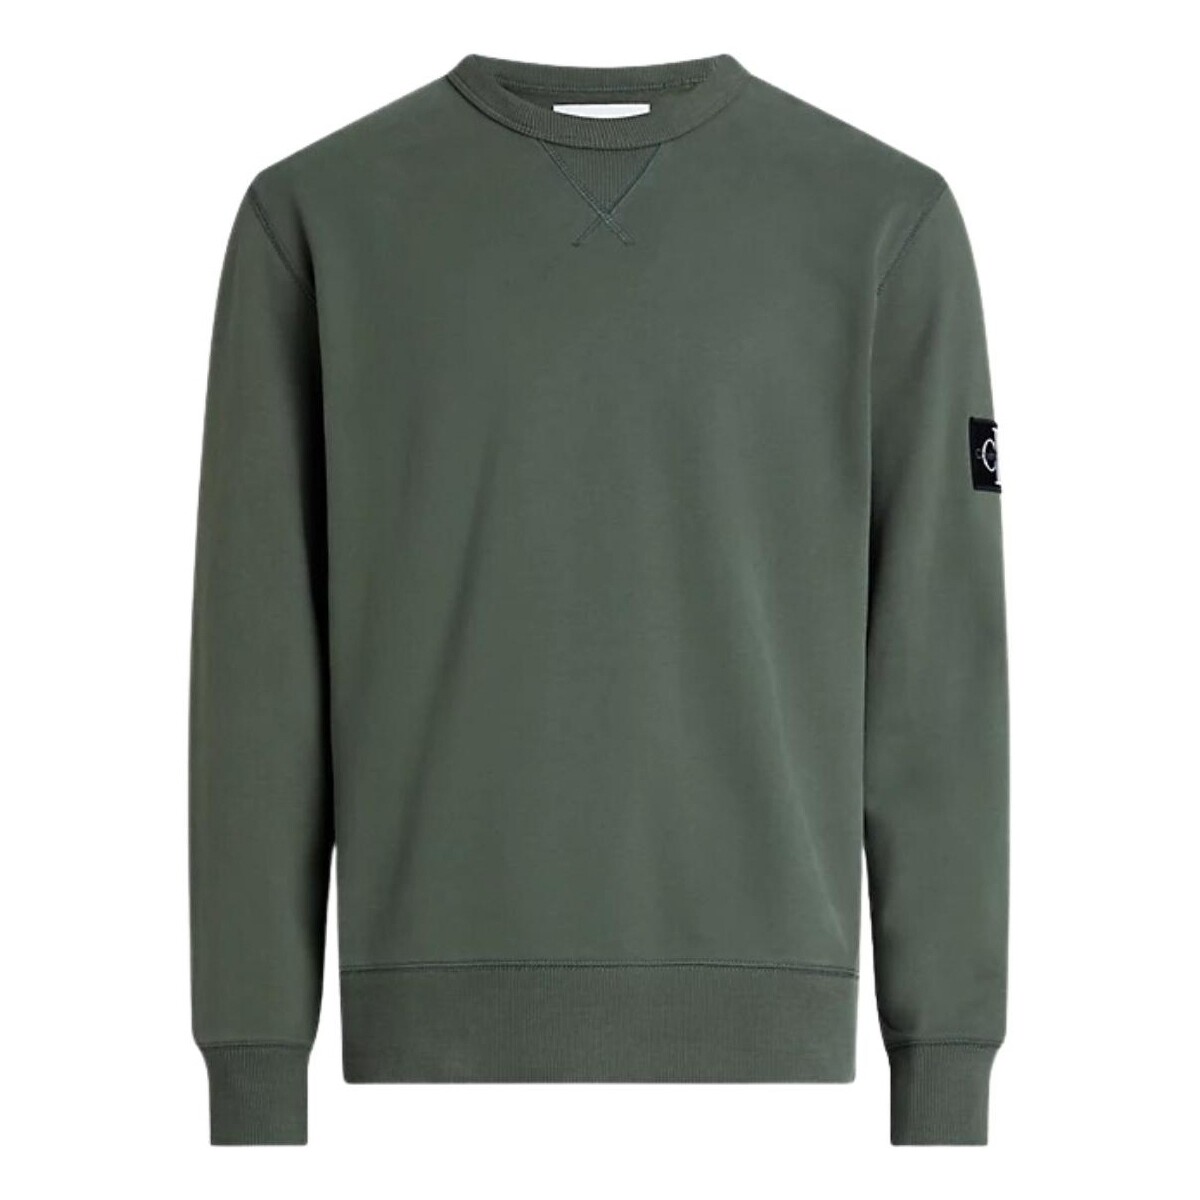 Vêtements Homme Sweats Calvin Klein Jeans Sweat homme  Ref 61452 Vert Vert